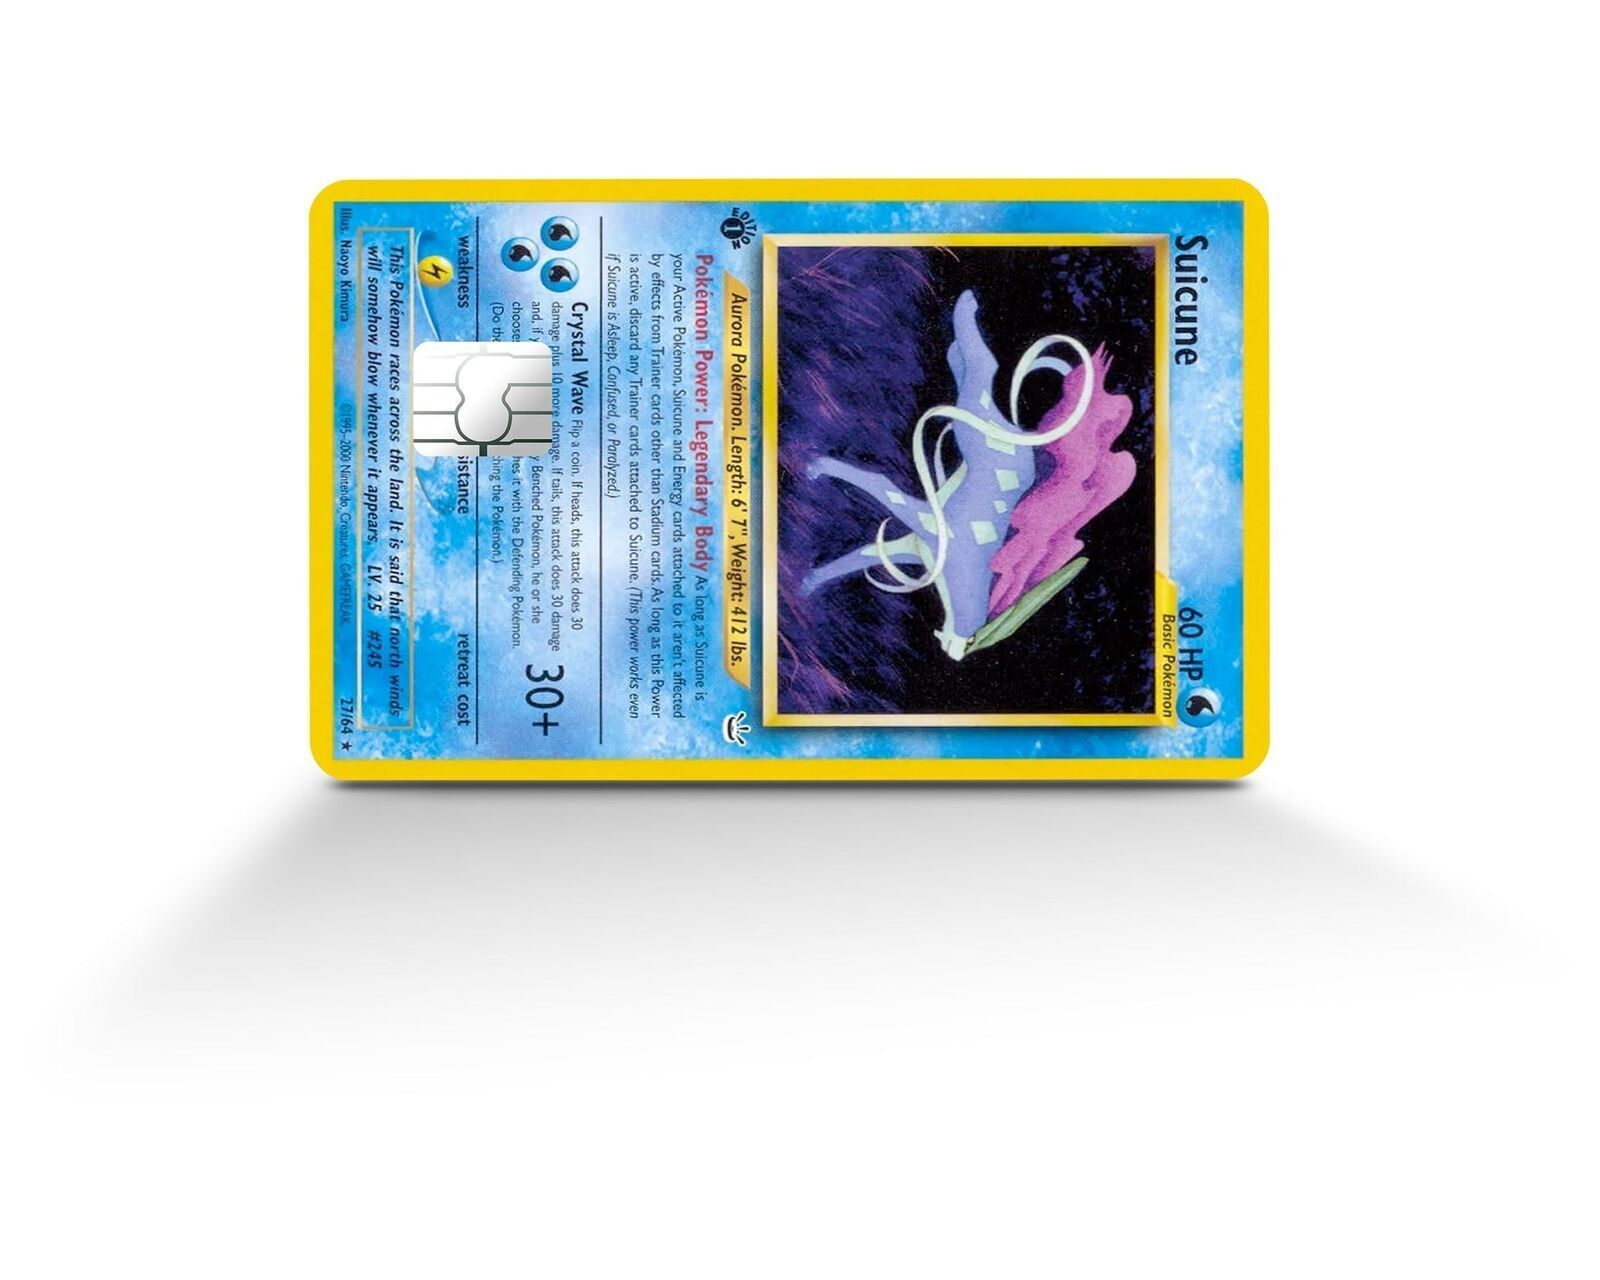 Pokemon 1st Edition Charizard Credit Card Skin / Decal Sticker